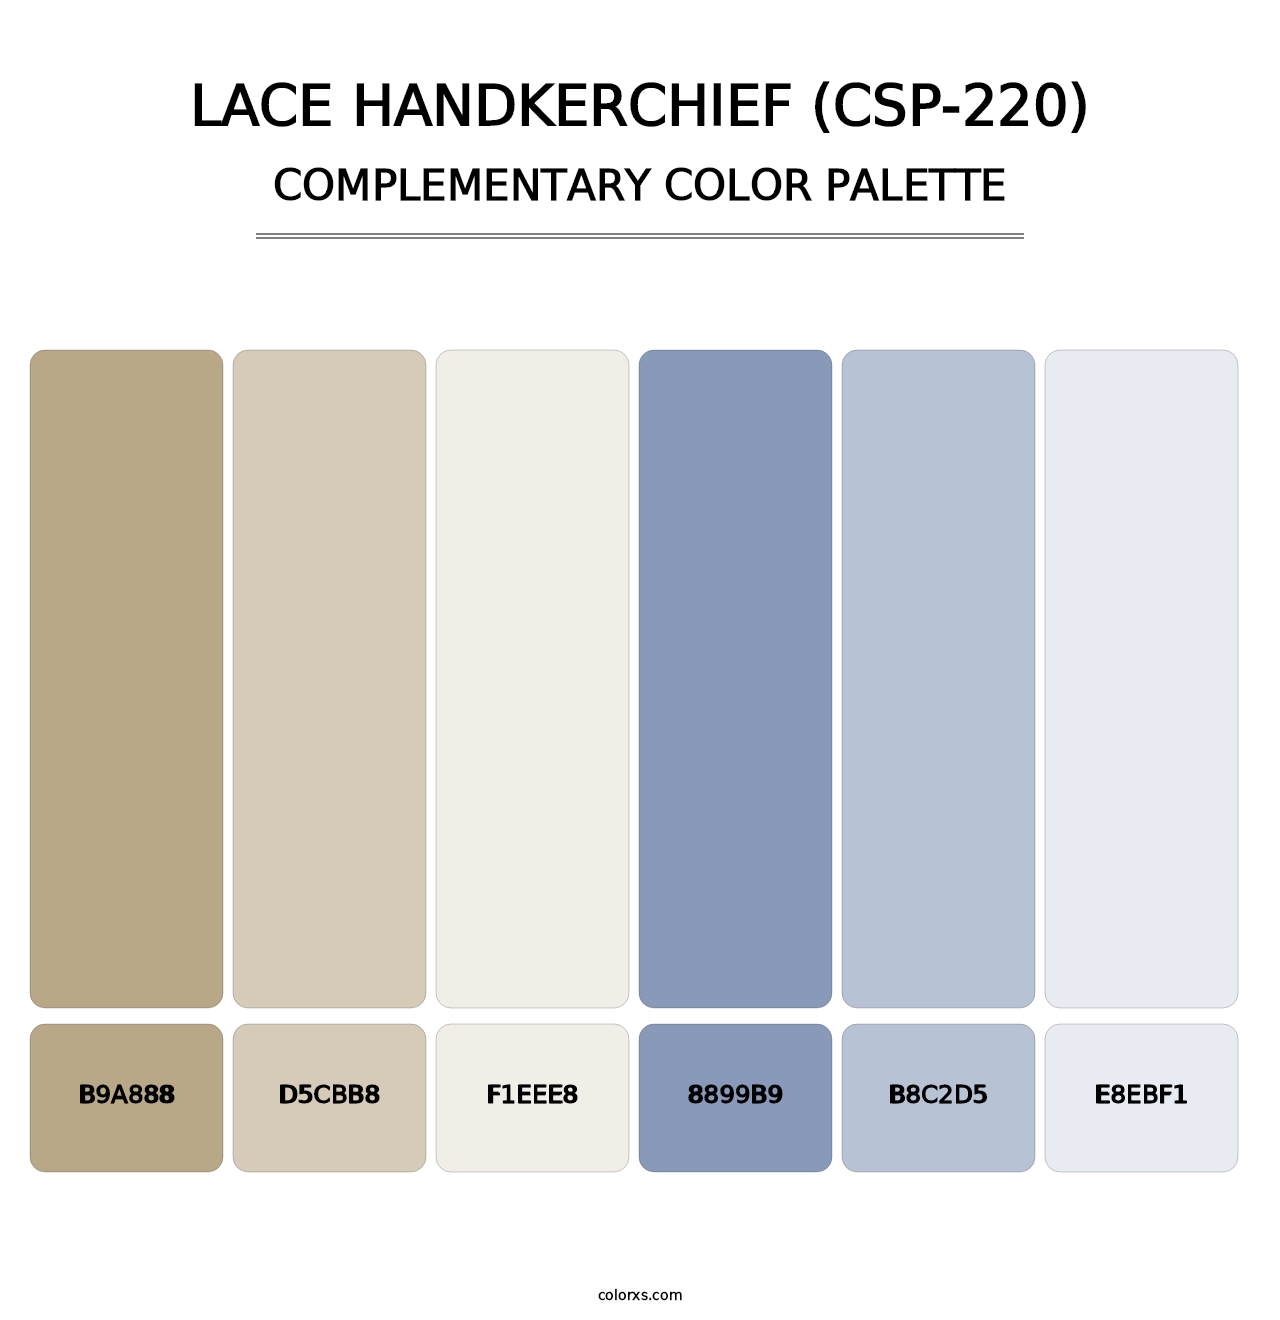 Lace Handkerchief (CSP-220) - Complementary Color Palette